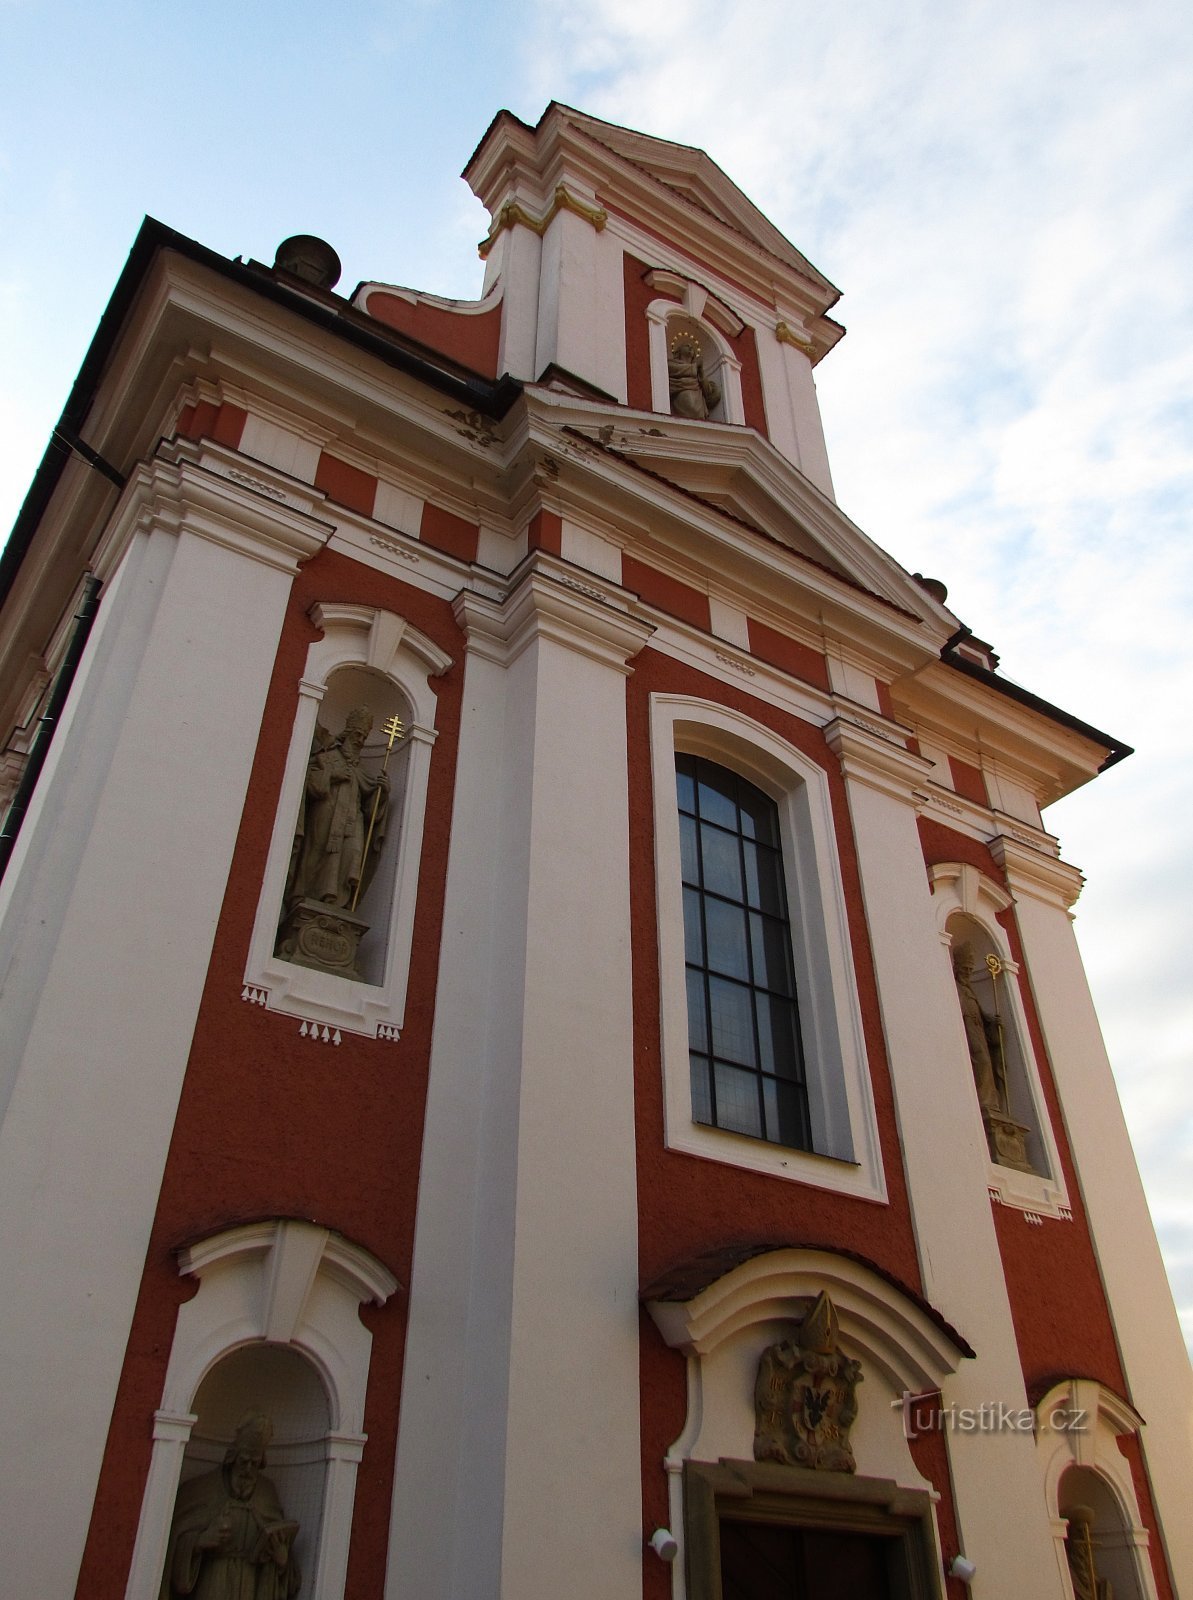 Van Polešovice via twee uitkijktorens naar Stříbrnice